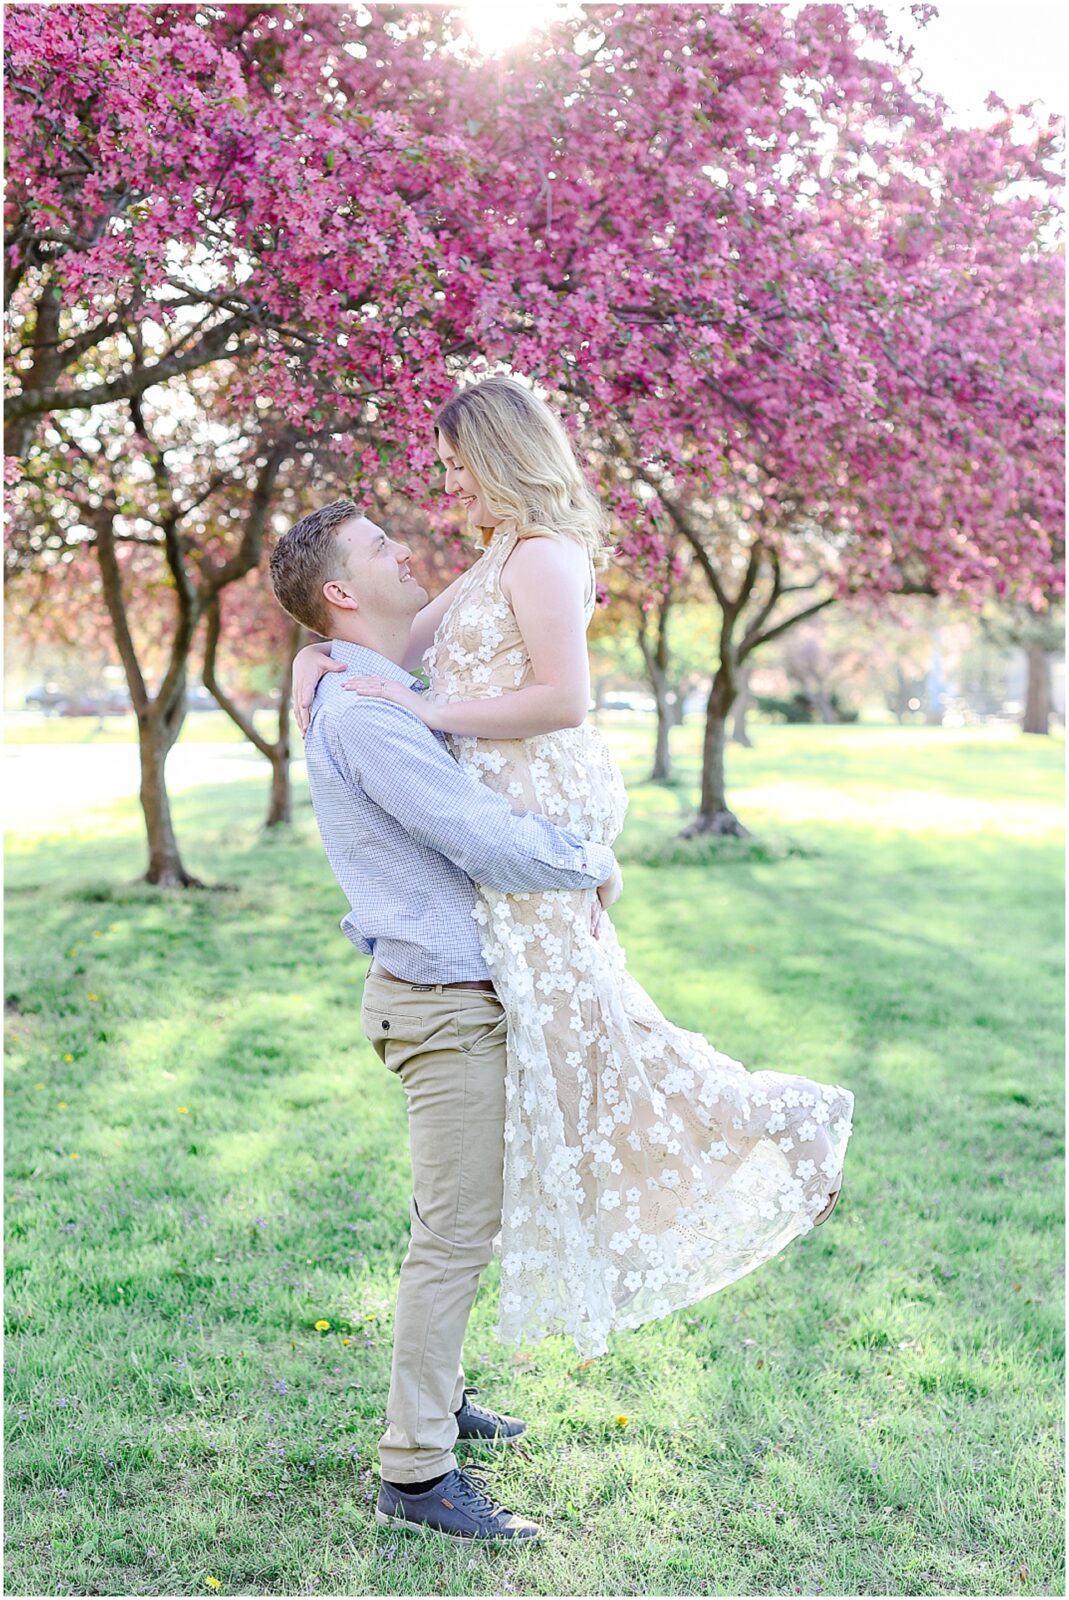 Kansas City and Olathe and Overland Park Kansas - Engagement Photos - Engagement Session - Pink Trees - Spring Pink Flowers Wedding Photos